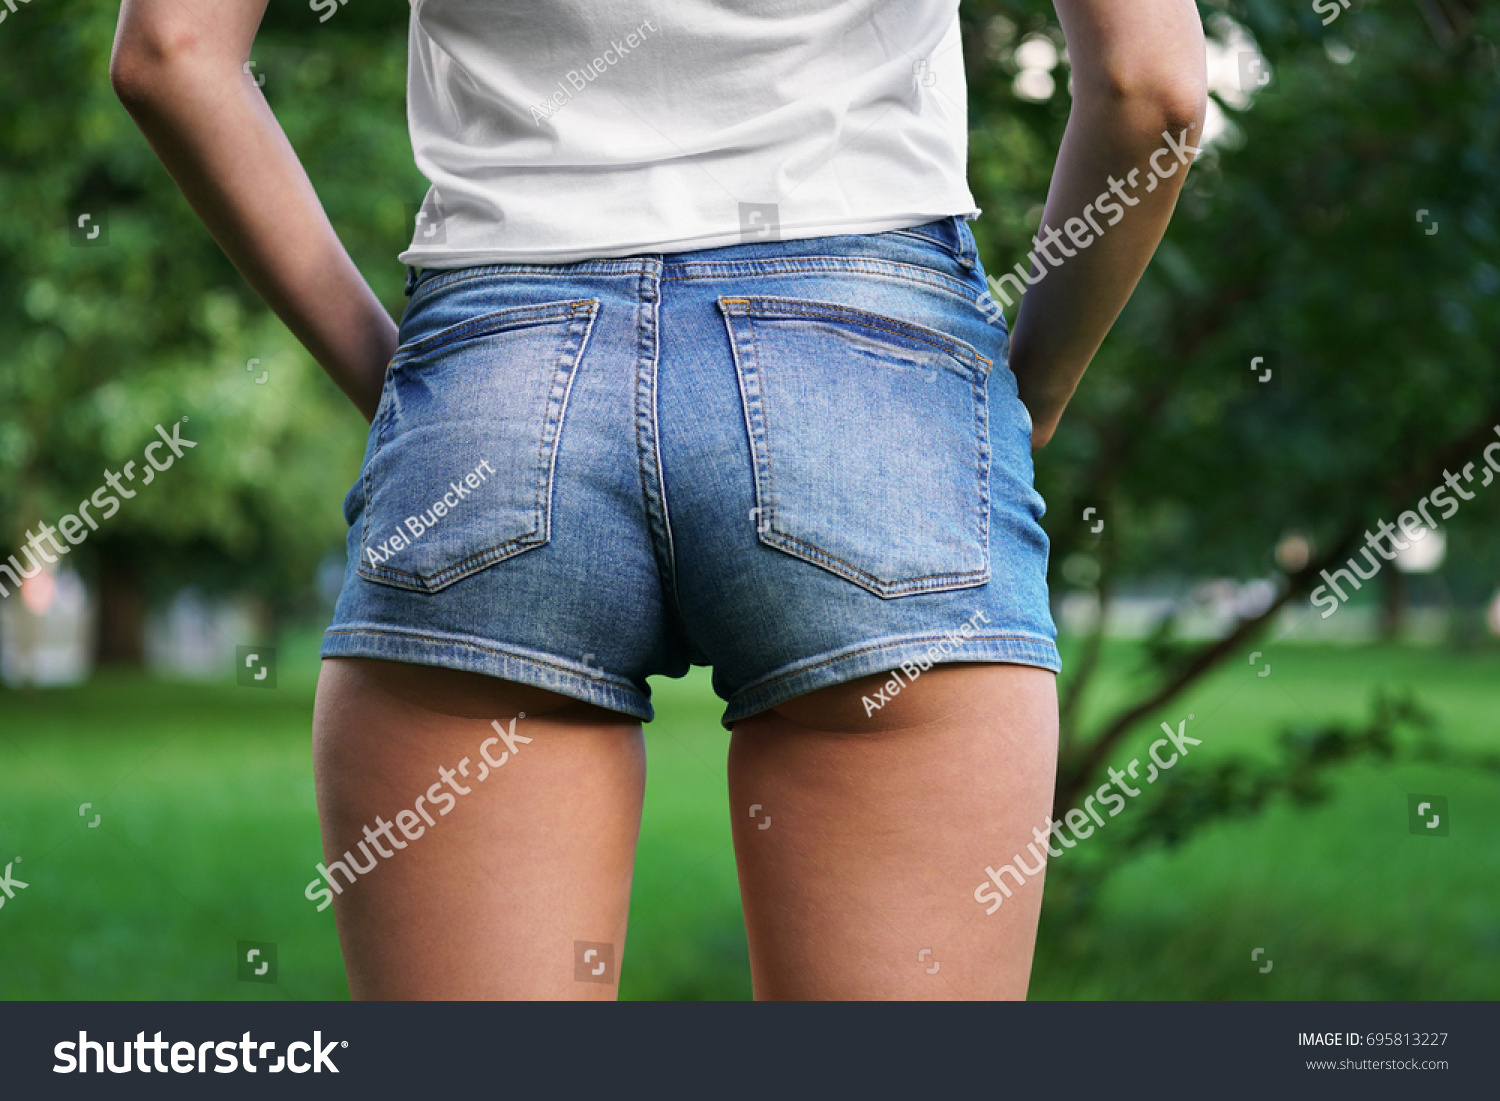 Hot Teens In Short Skirts